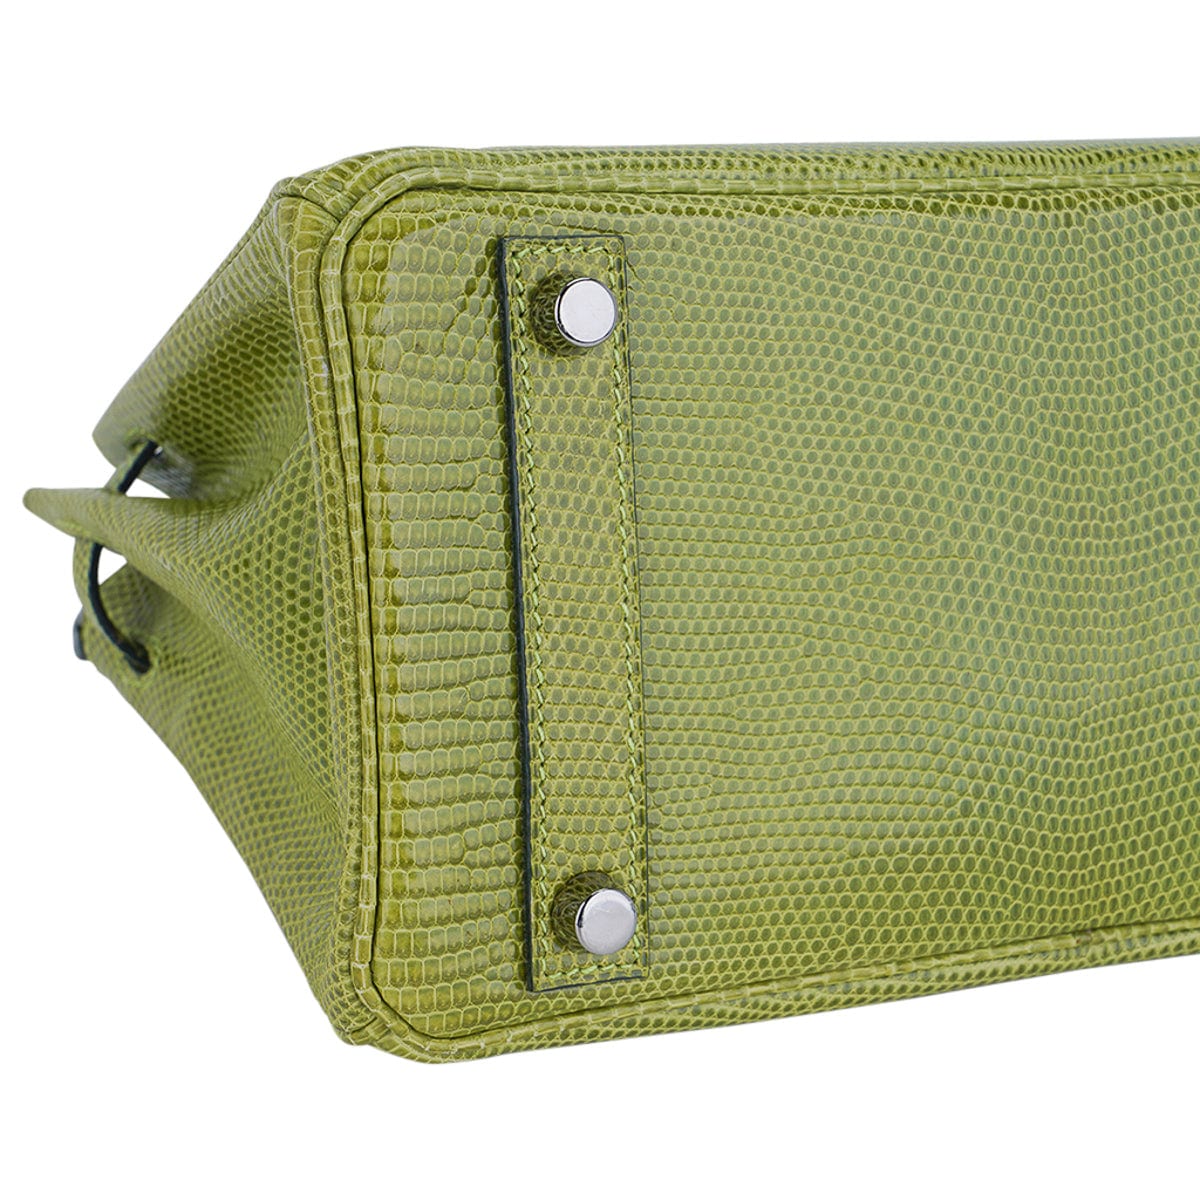 Hermes Limited Edition Birkin 25 Bag in Vert Anis Lizard with Palladium  Hardware